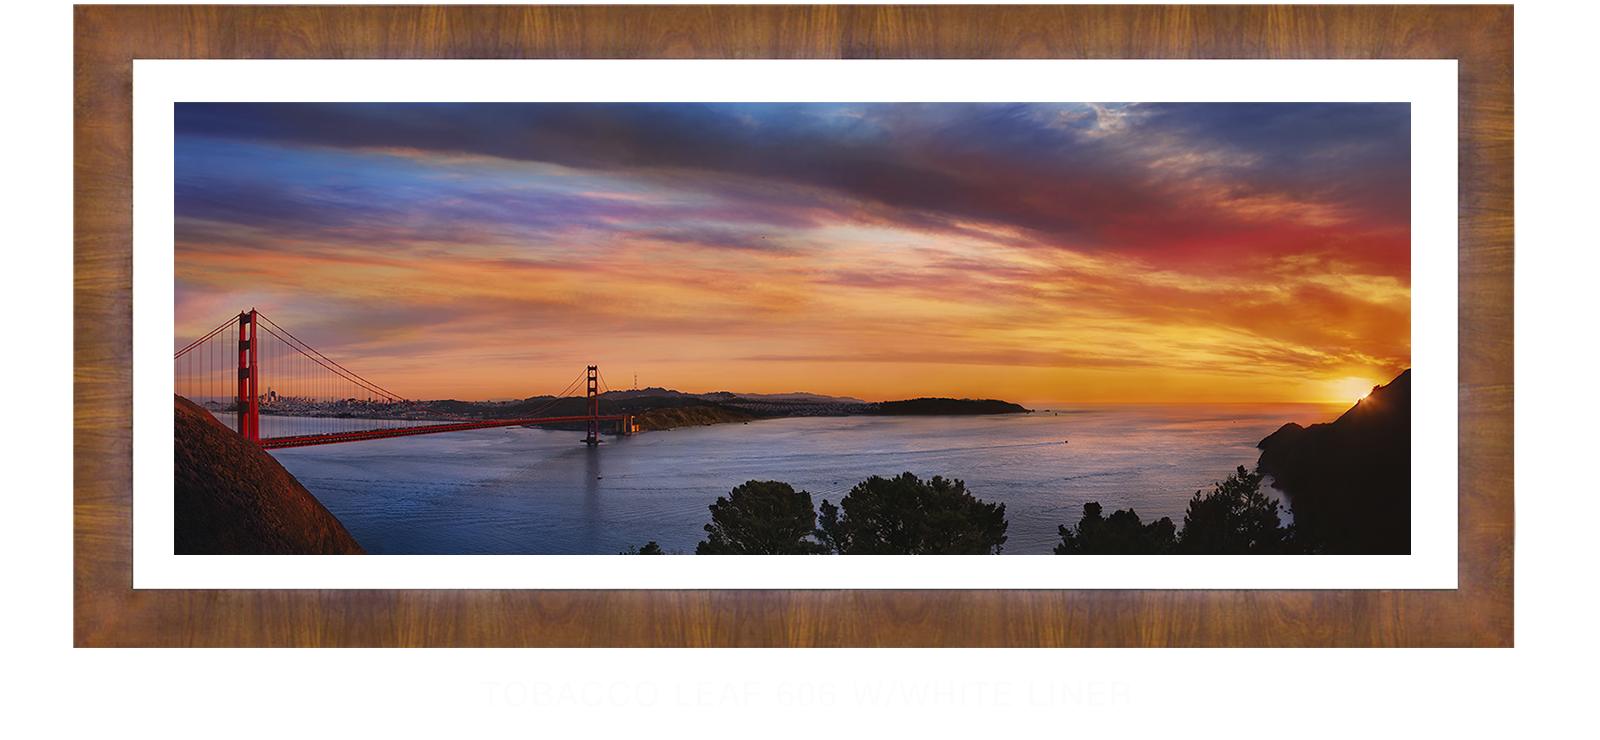 24GoldenGateBridge Tobacco Leaf 606 w_Wht Liner T